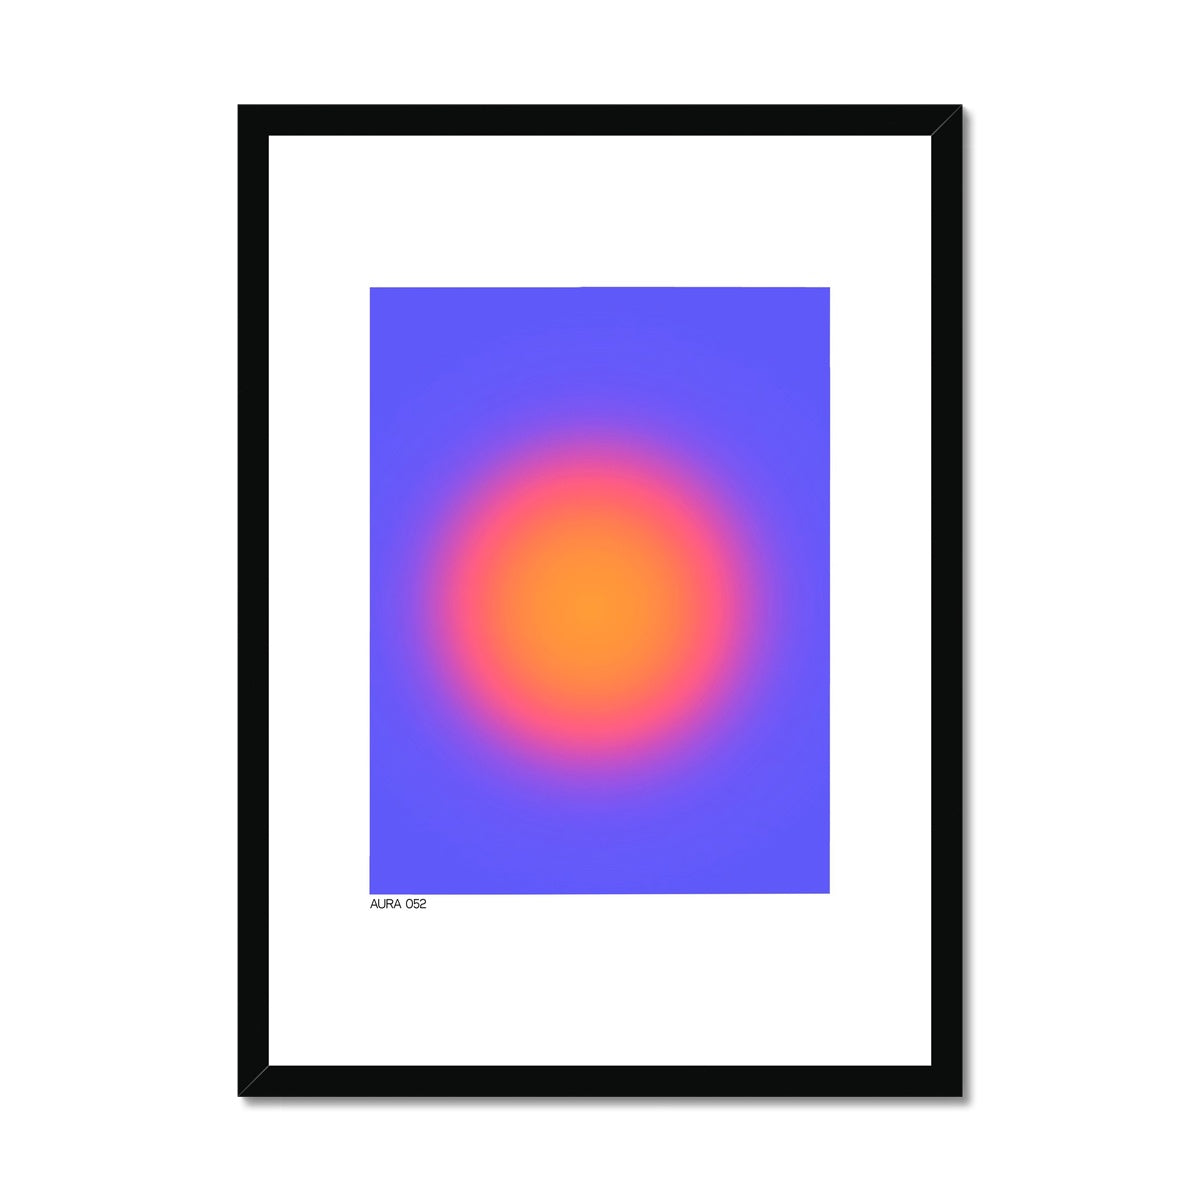 aura 052 Framed & Mounted Print